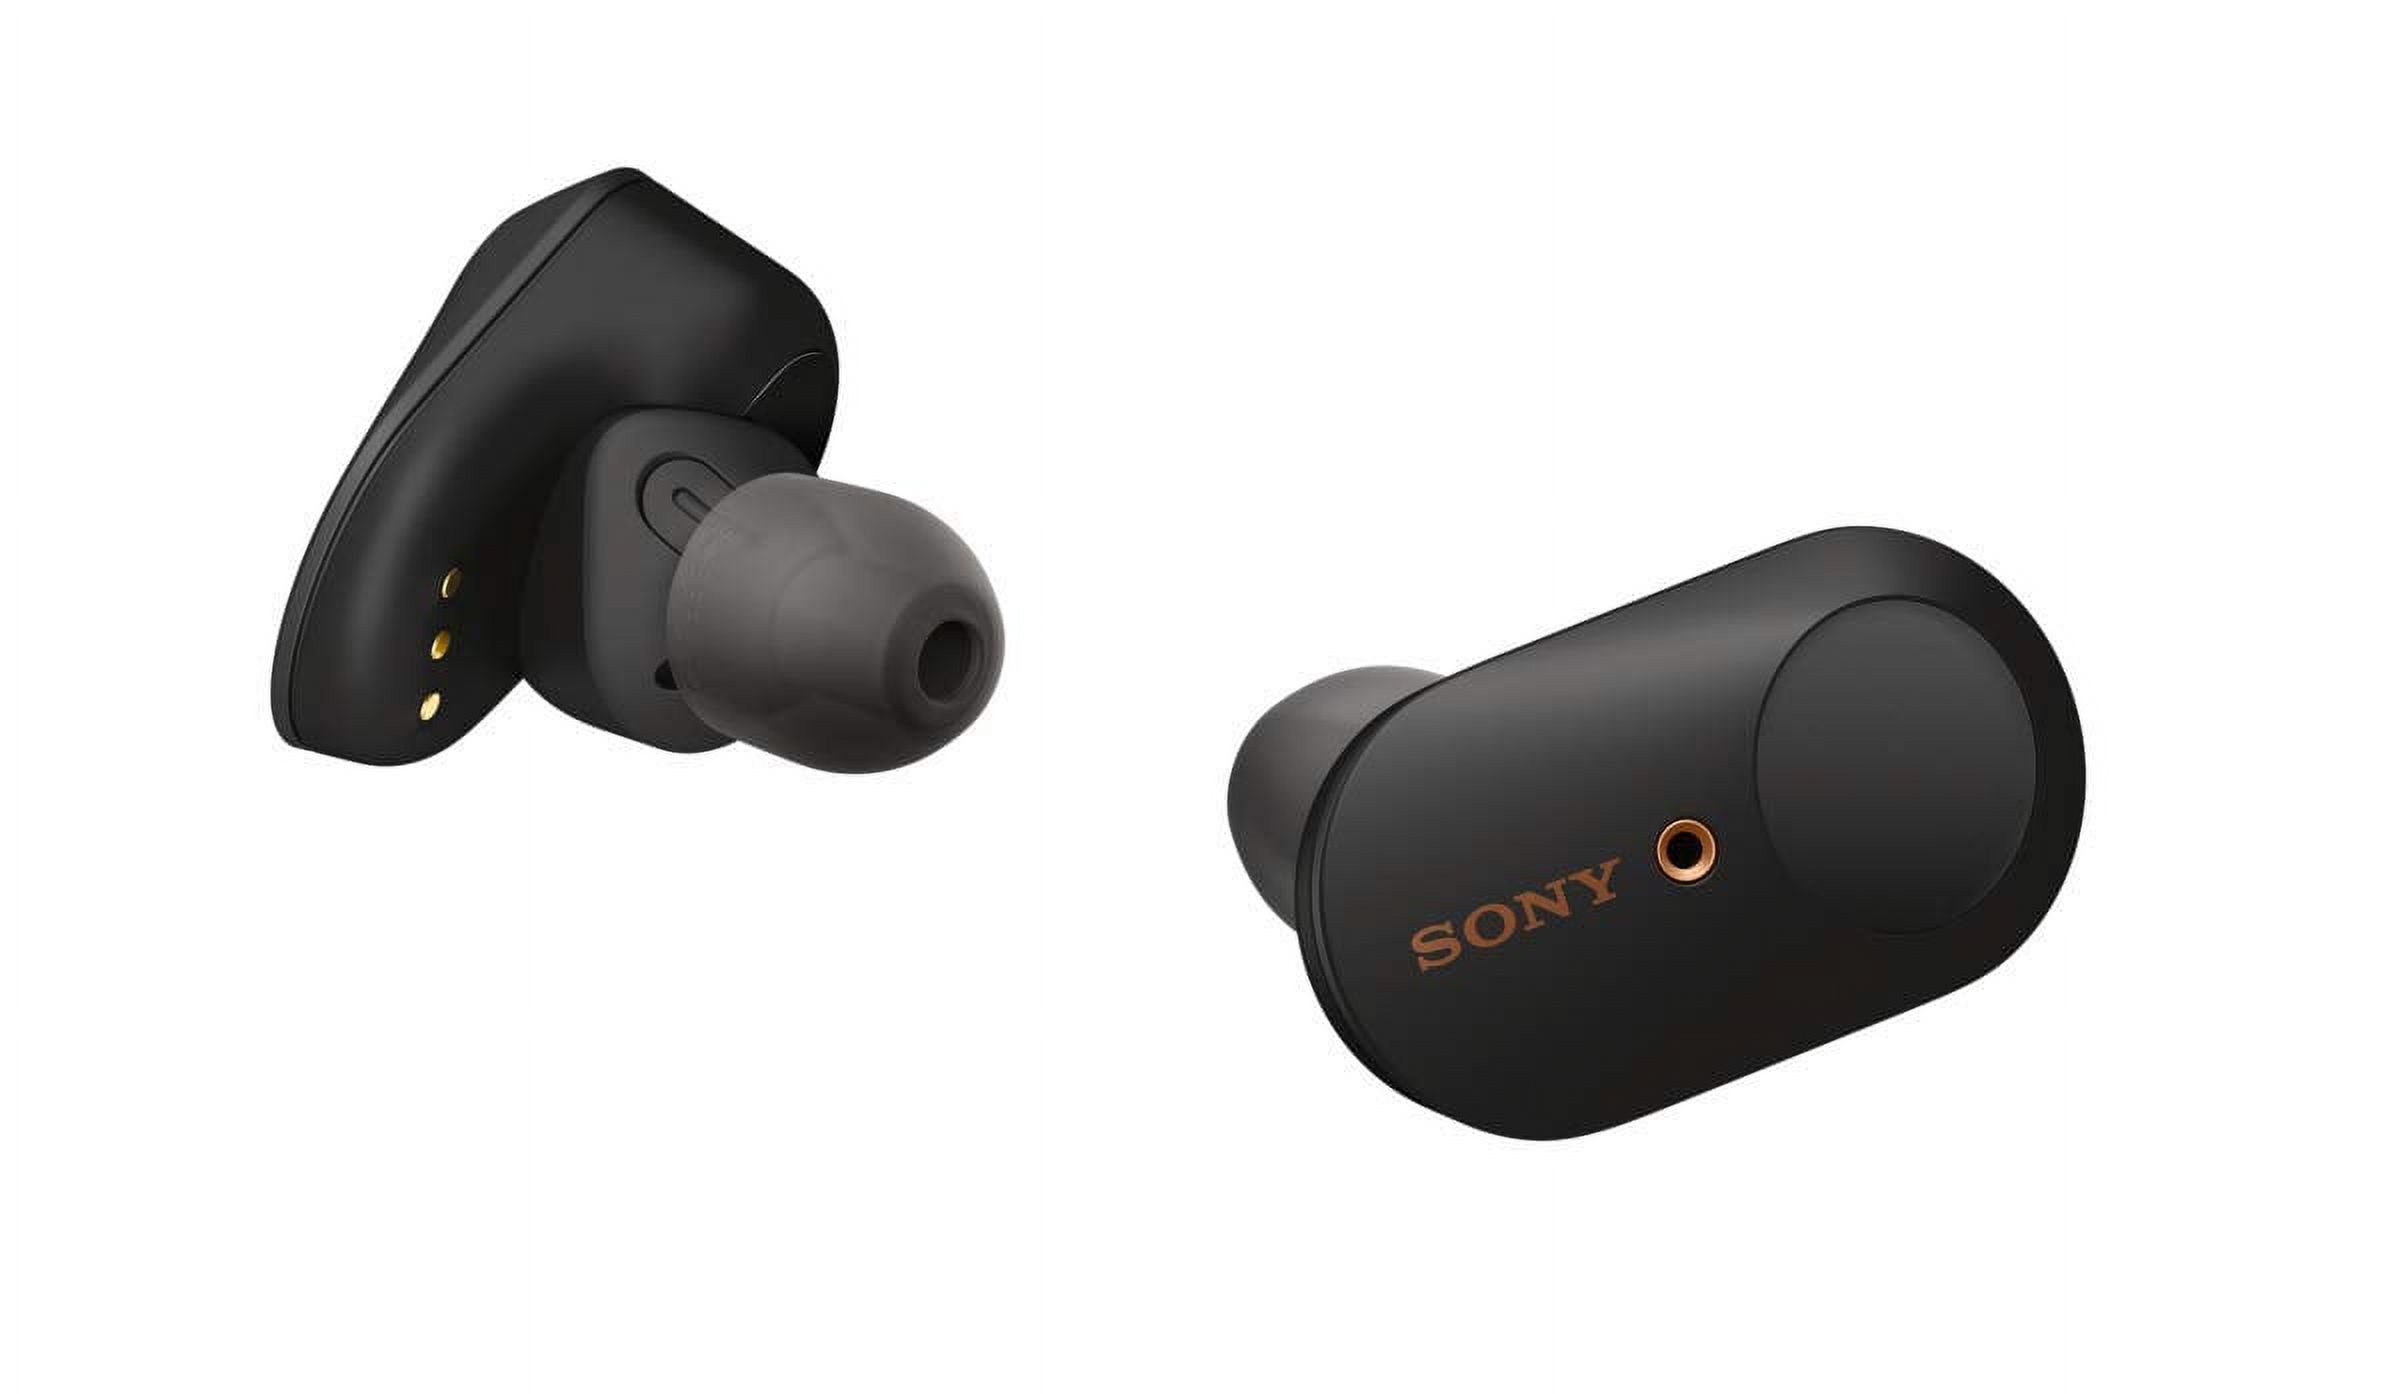 Sony WF-1000XM3 True Wireless Noise-Canceling Bluetooth Wireless Earbuds- Black - image 12 of 16